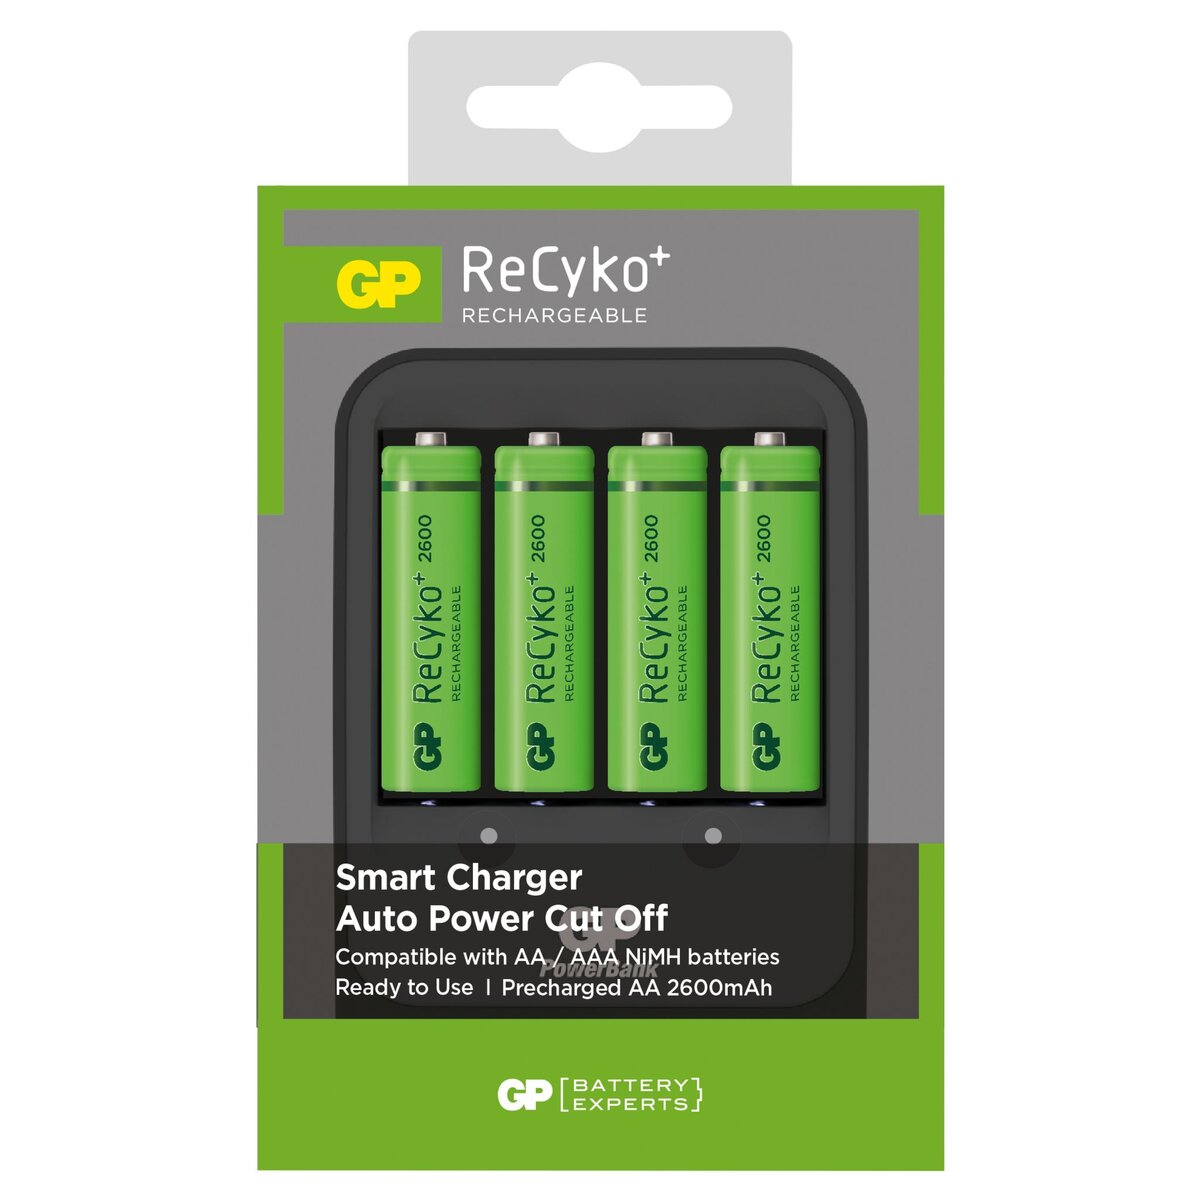 GP Recyko Chargeur PR 570 - Lot de 4 piles AA + chargeur